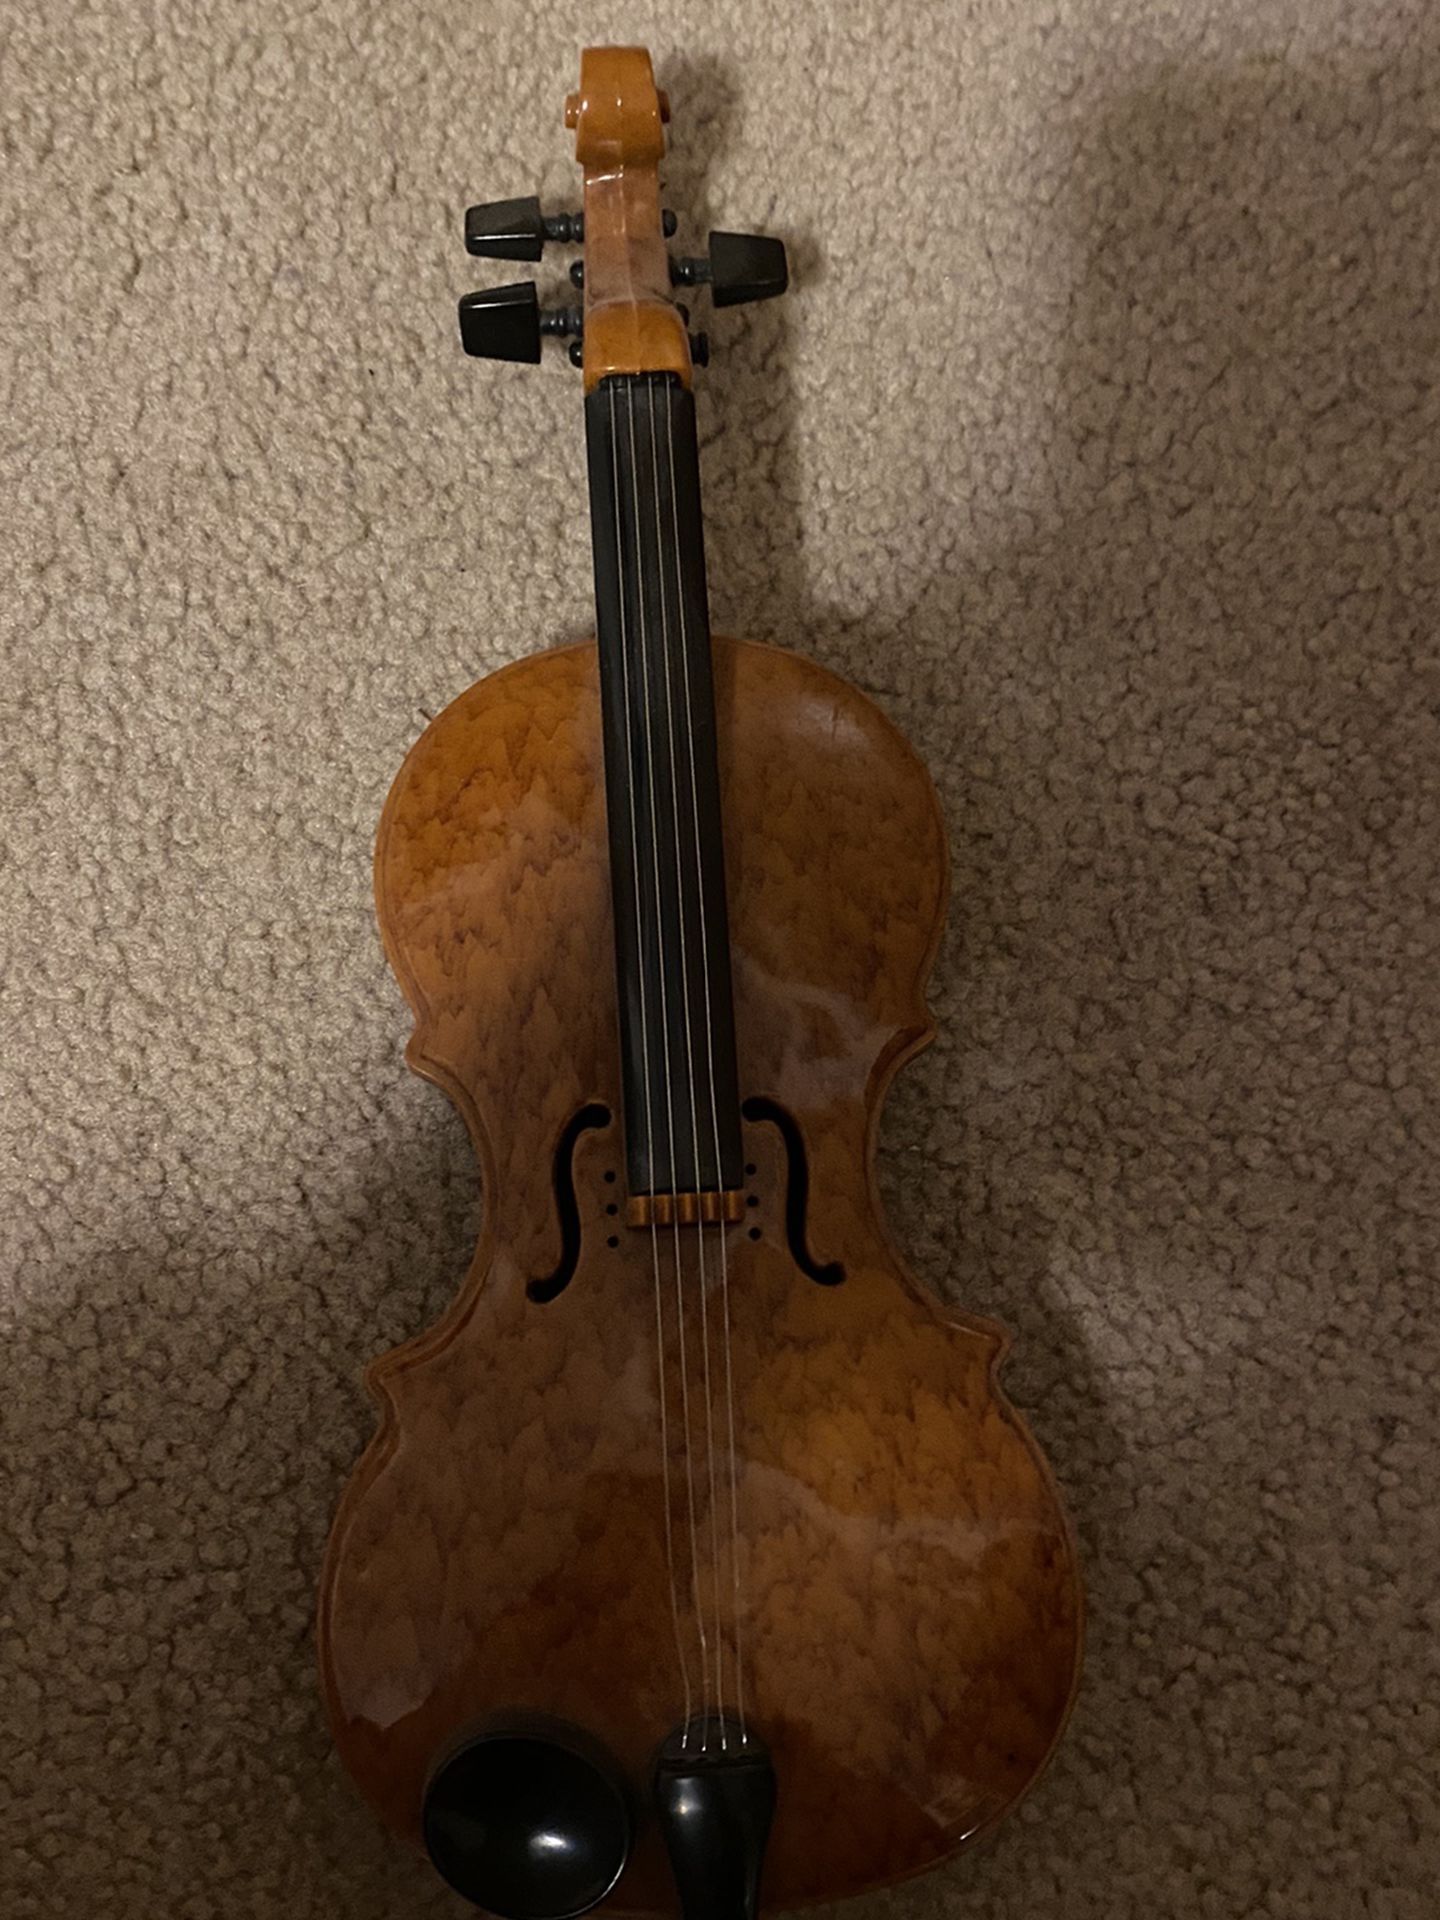 Little Violin Toy